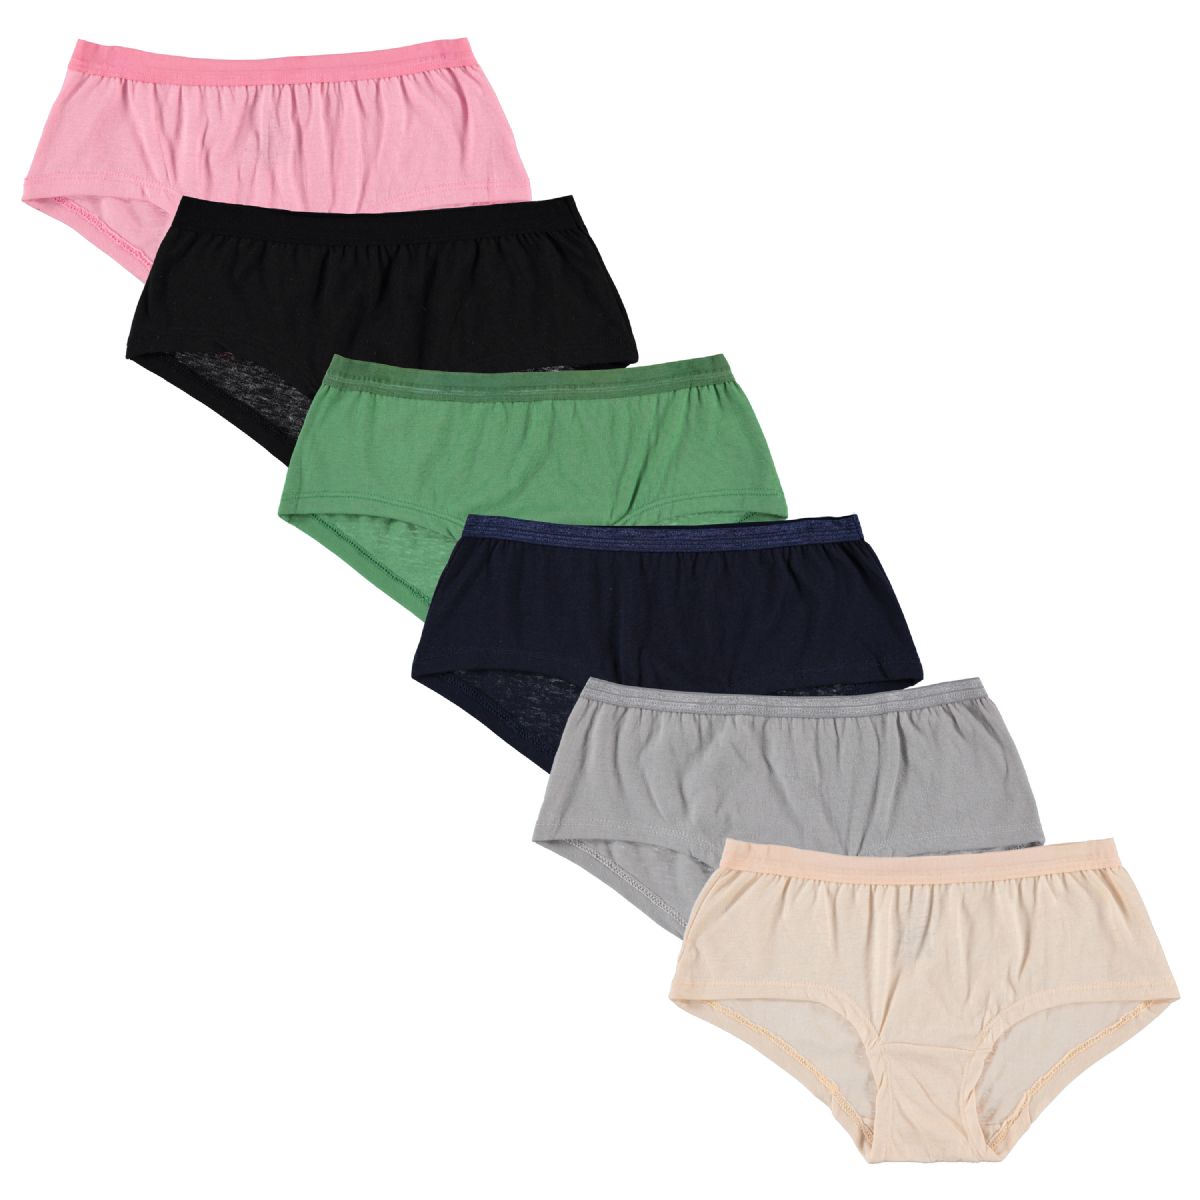 24 Wholesale Yacht & Smith Womens Cotton Lycra Underwear, Panty Briefs, 95% Cotton Soft Assorted Colors, Size Large